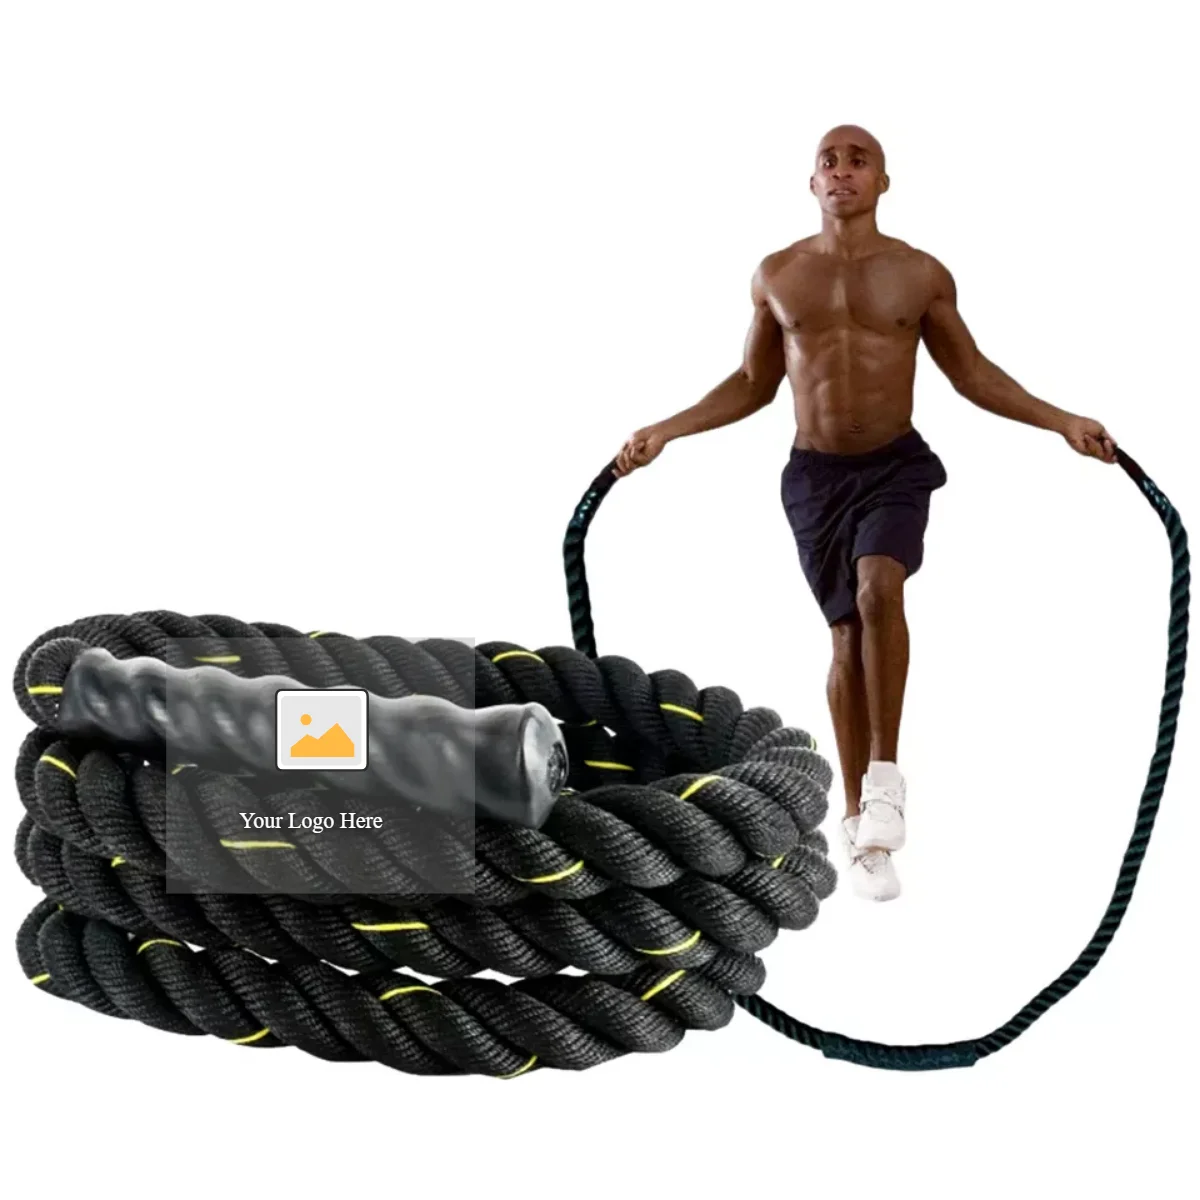 

Custom Logo 2.8 Meter Length Workout Exercise gym Battle Rope training jump skipping Rope heavi Fitness ropes, Black & yellow